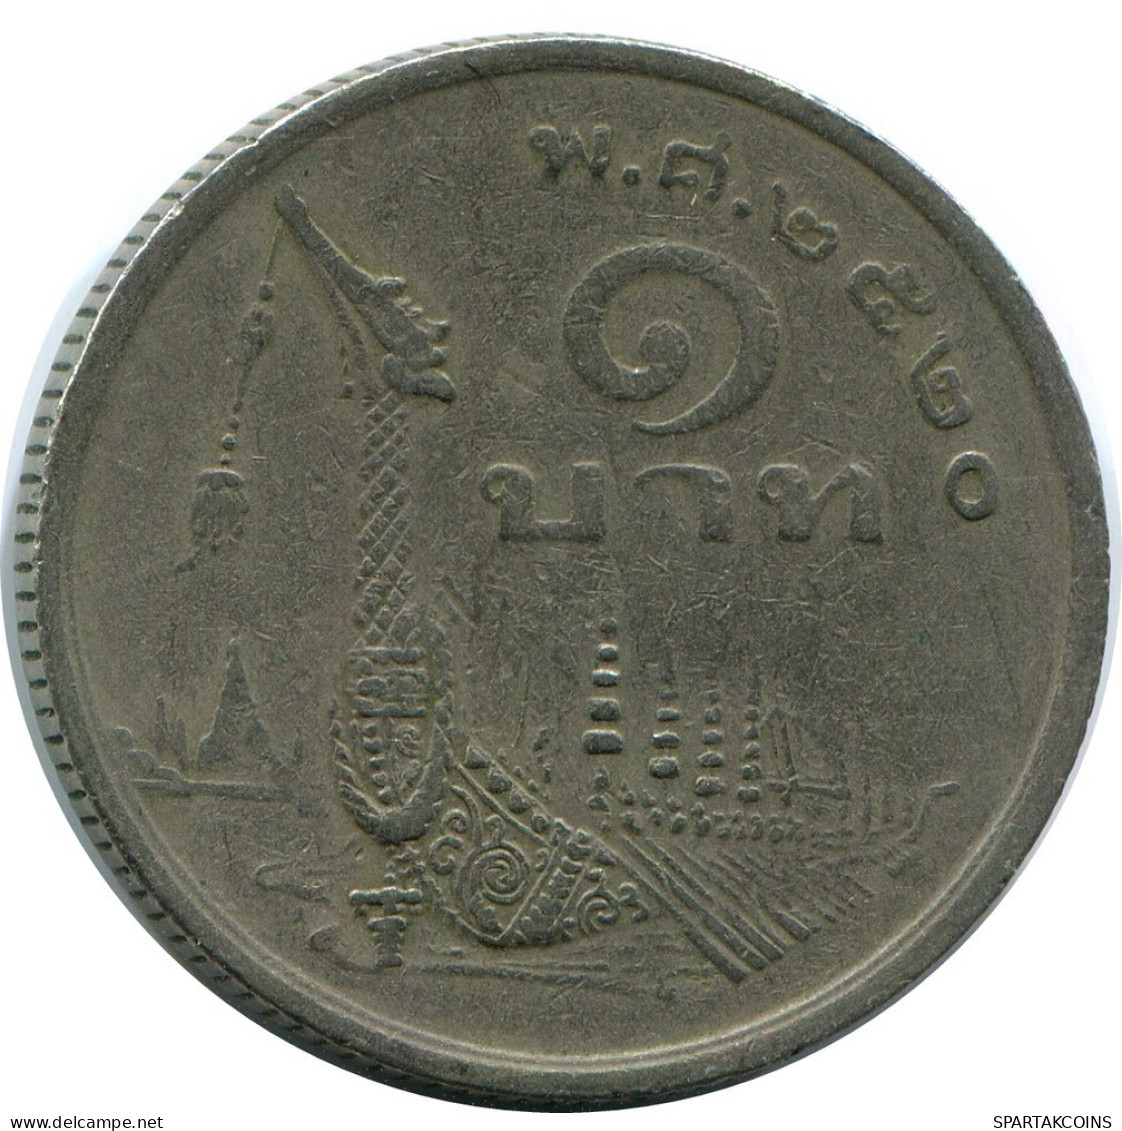 1 BAHT 1977 THAILAND Coin #AR879.U.A - Thailand